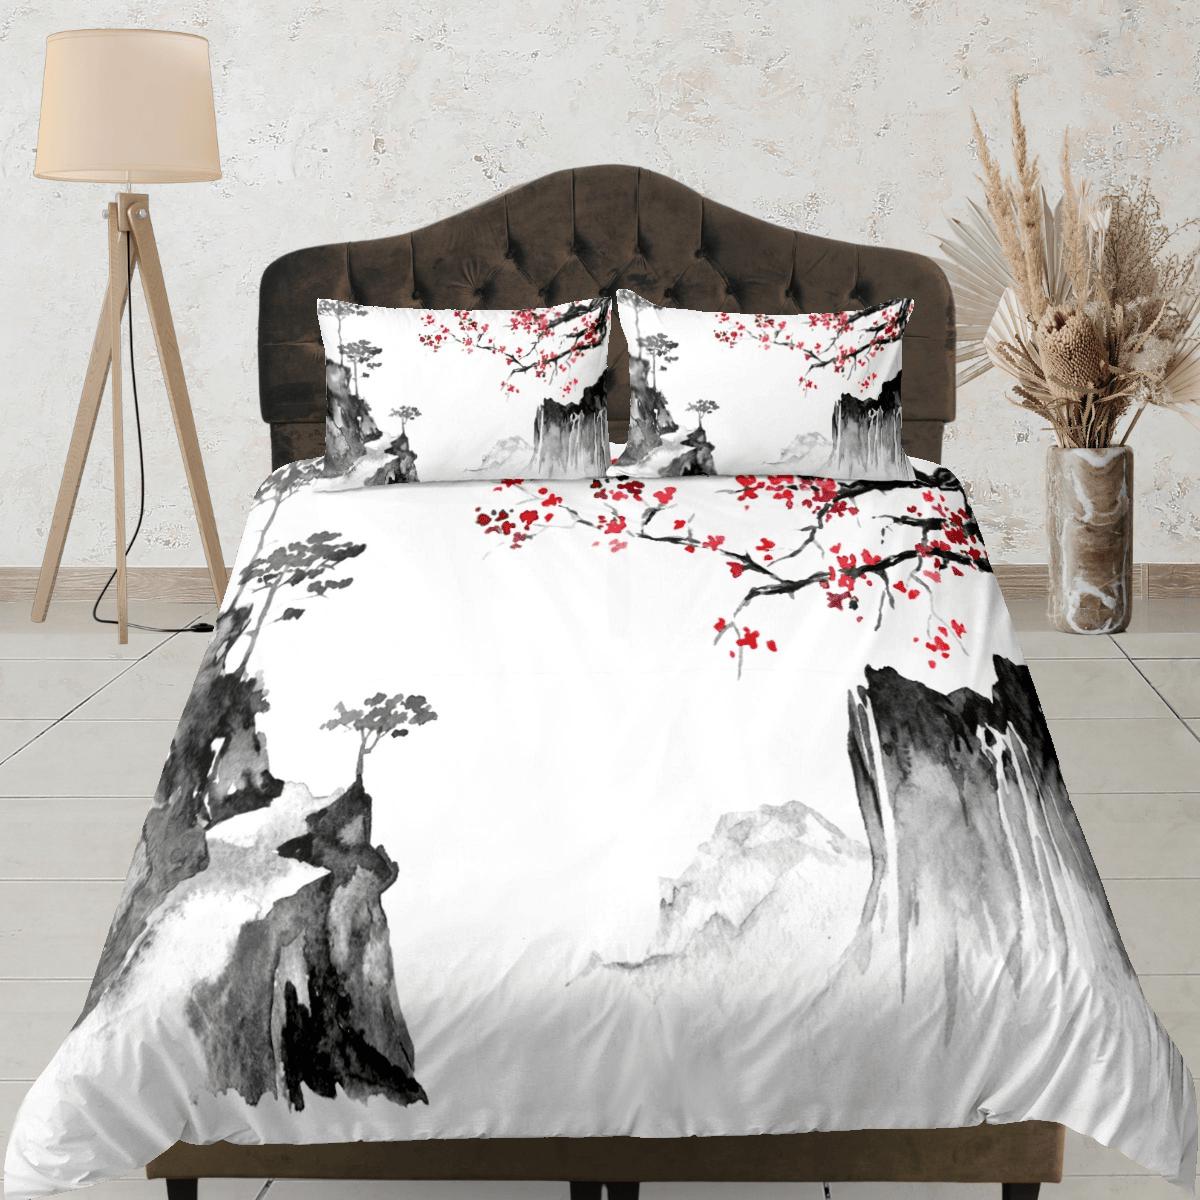 daintyduvet Cherry blossom oriental painting bedding floral prints duvet cover queen, king, boho bedding designer bedspread full size bedding aesthetic